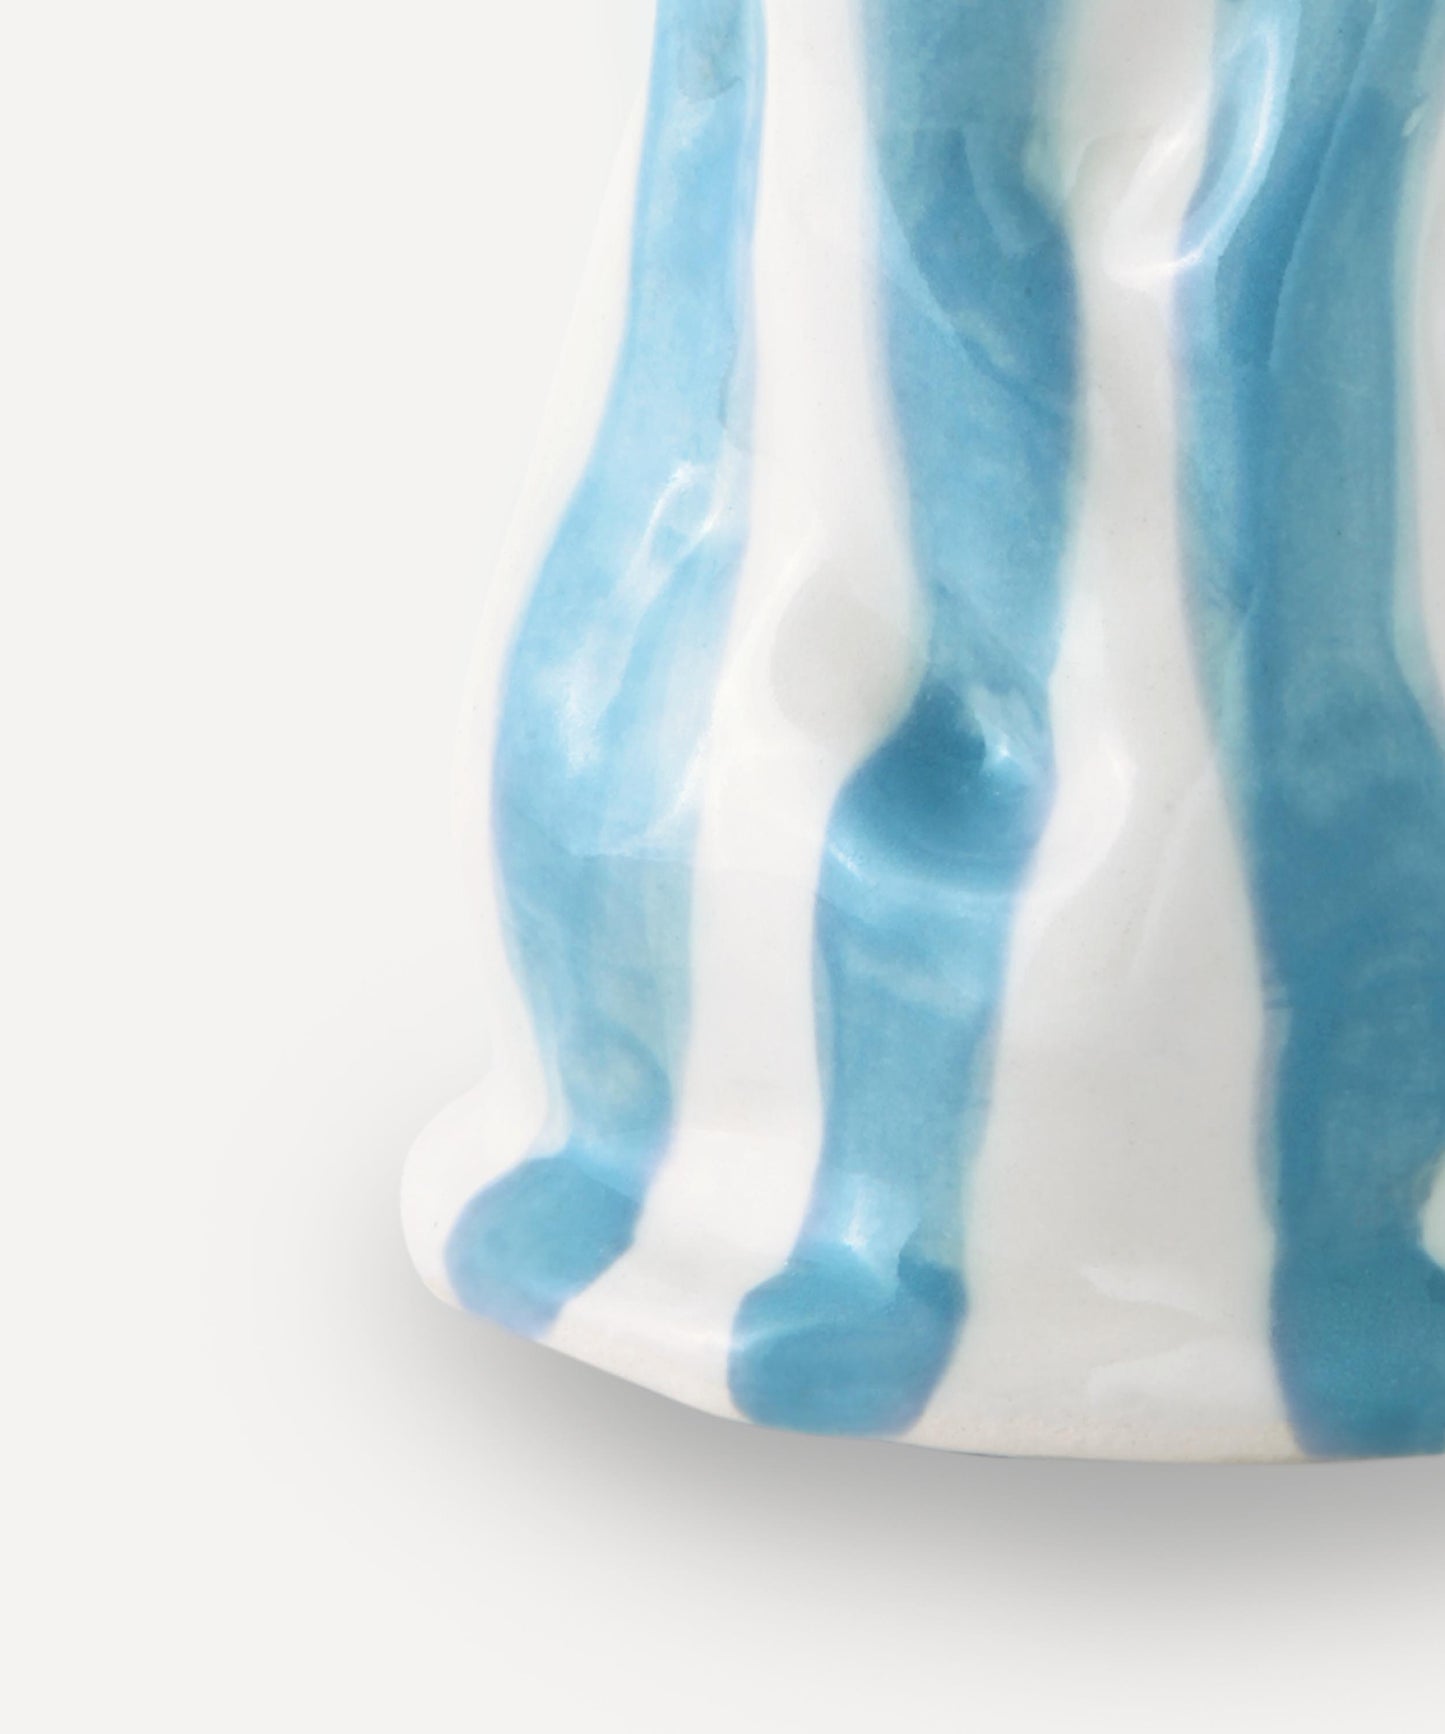 Turquoise candy stripe vase